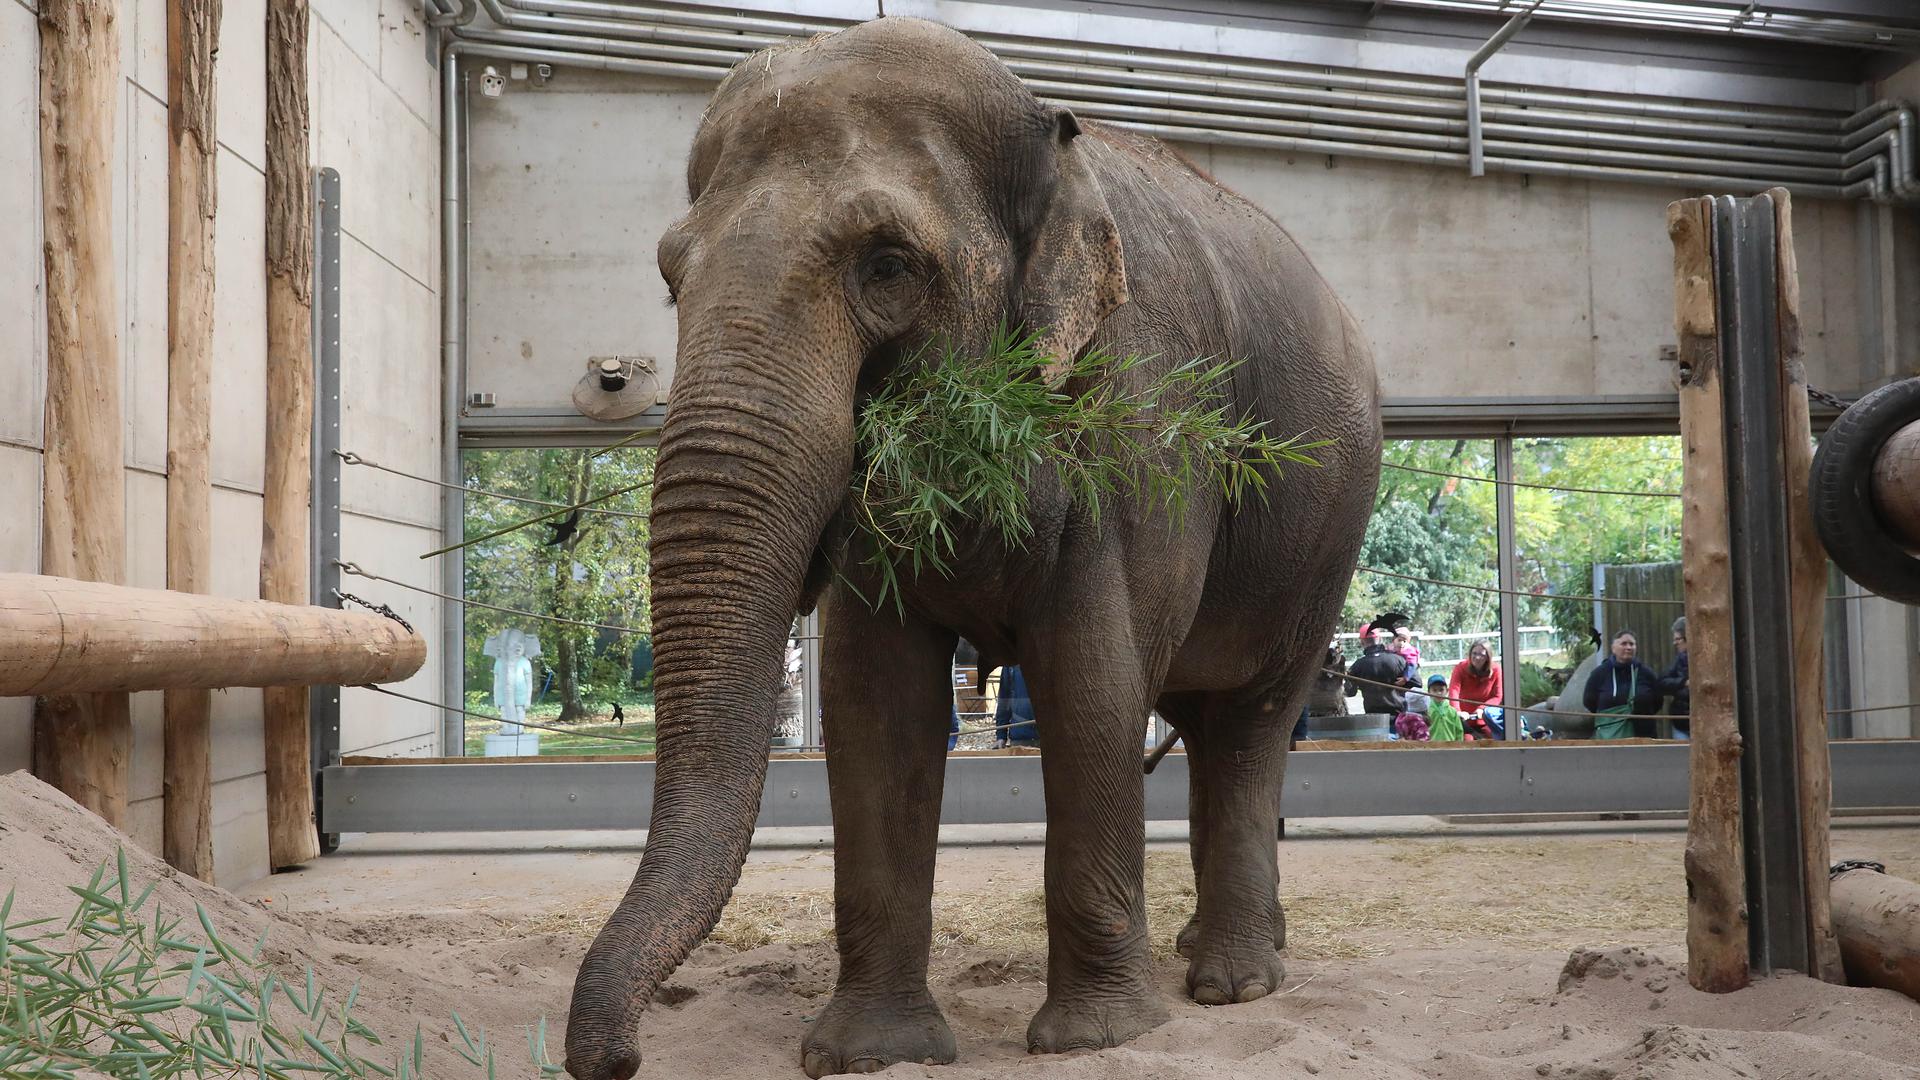 Elefantendame Saida akklimatisiert sich im Karlsruher Zoo.